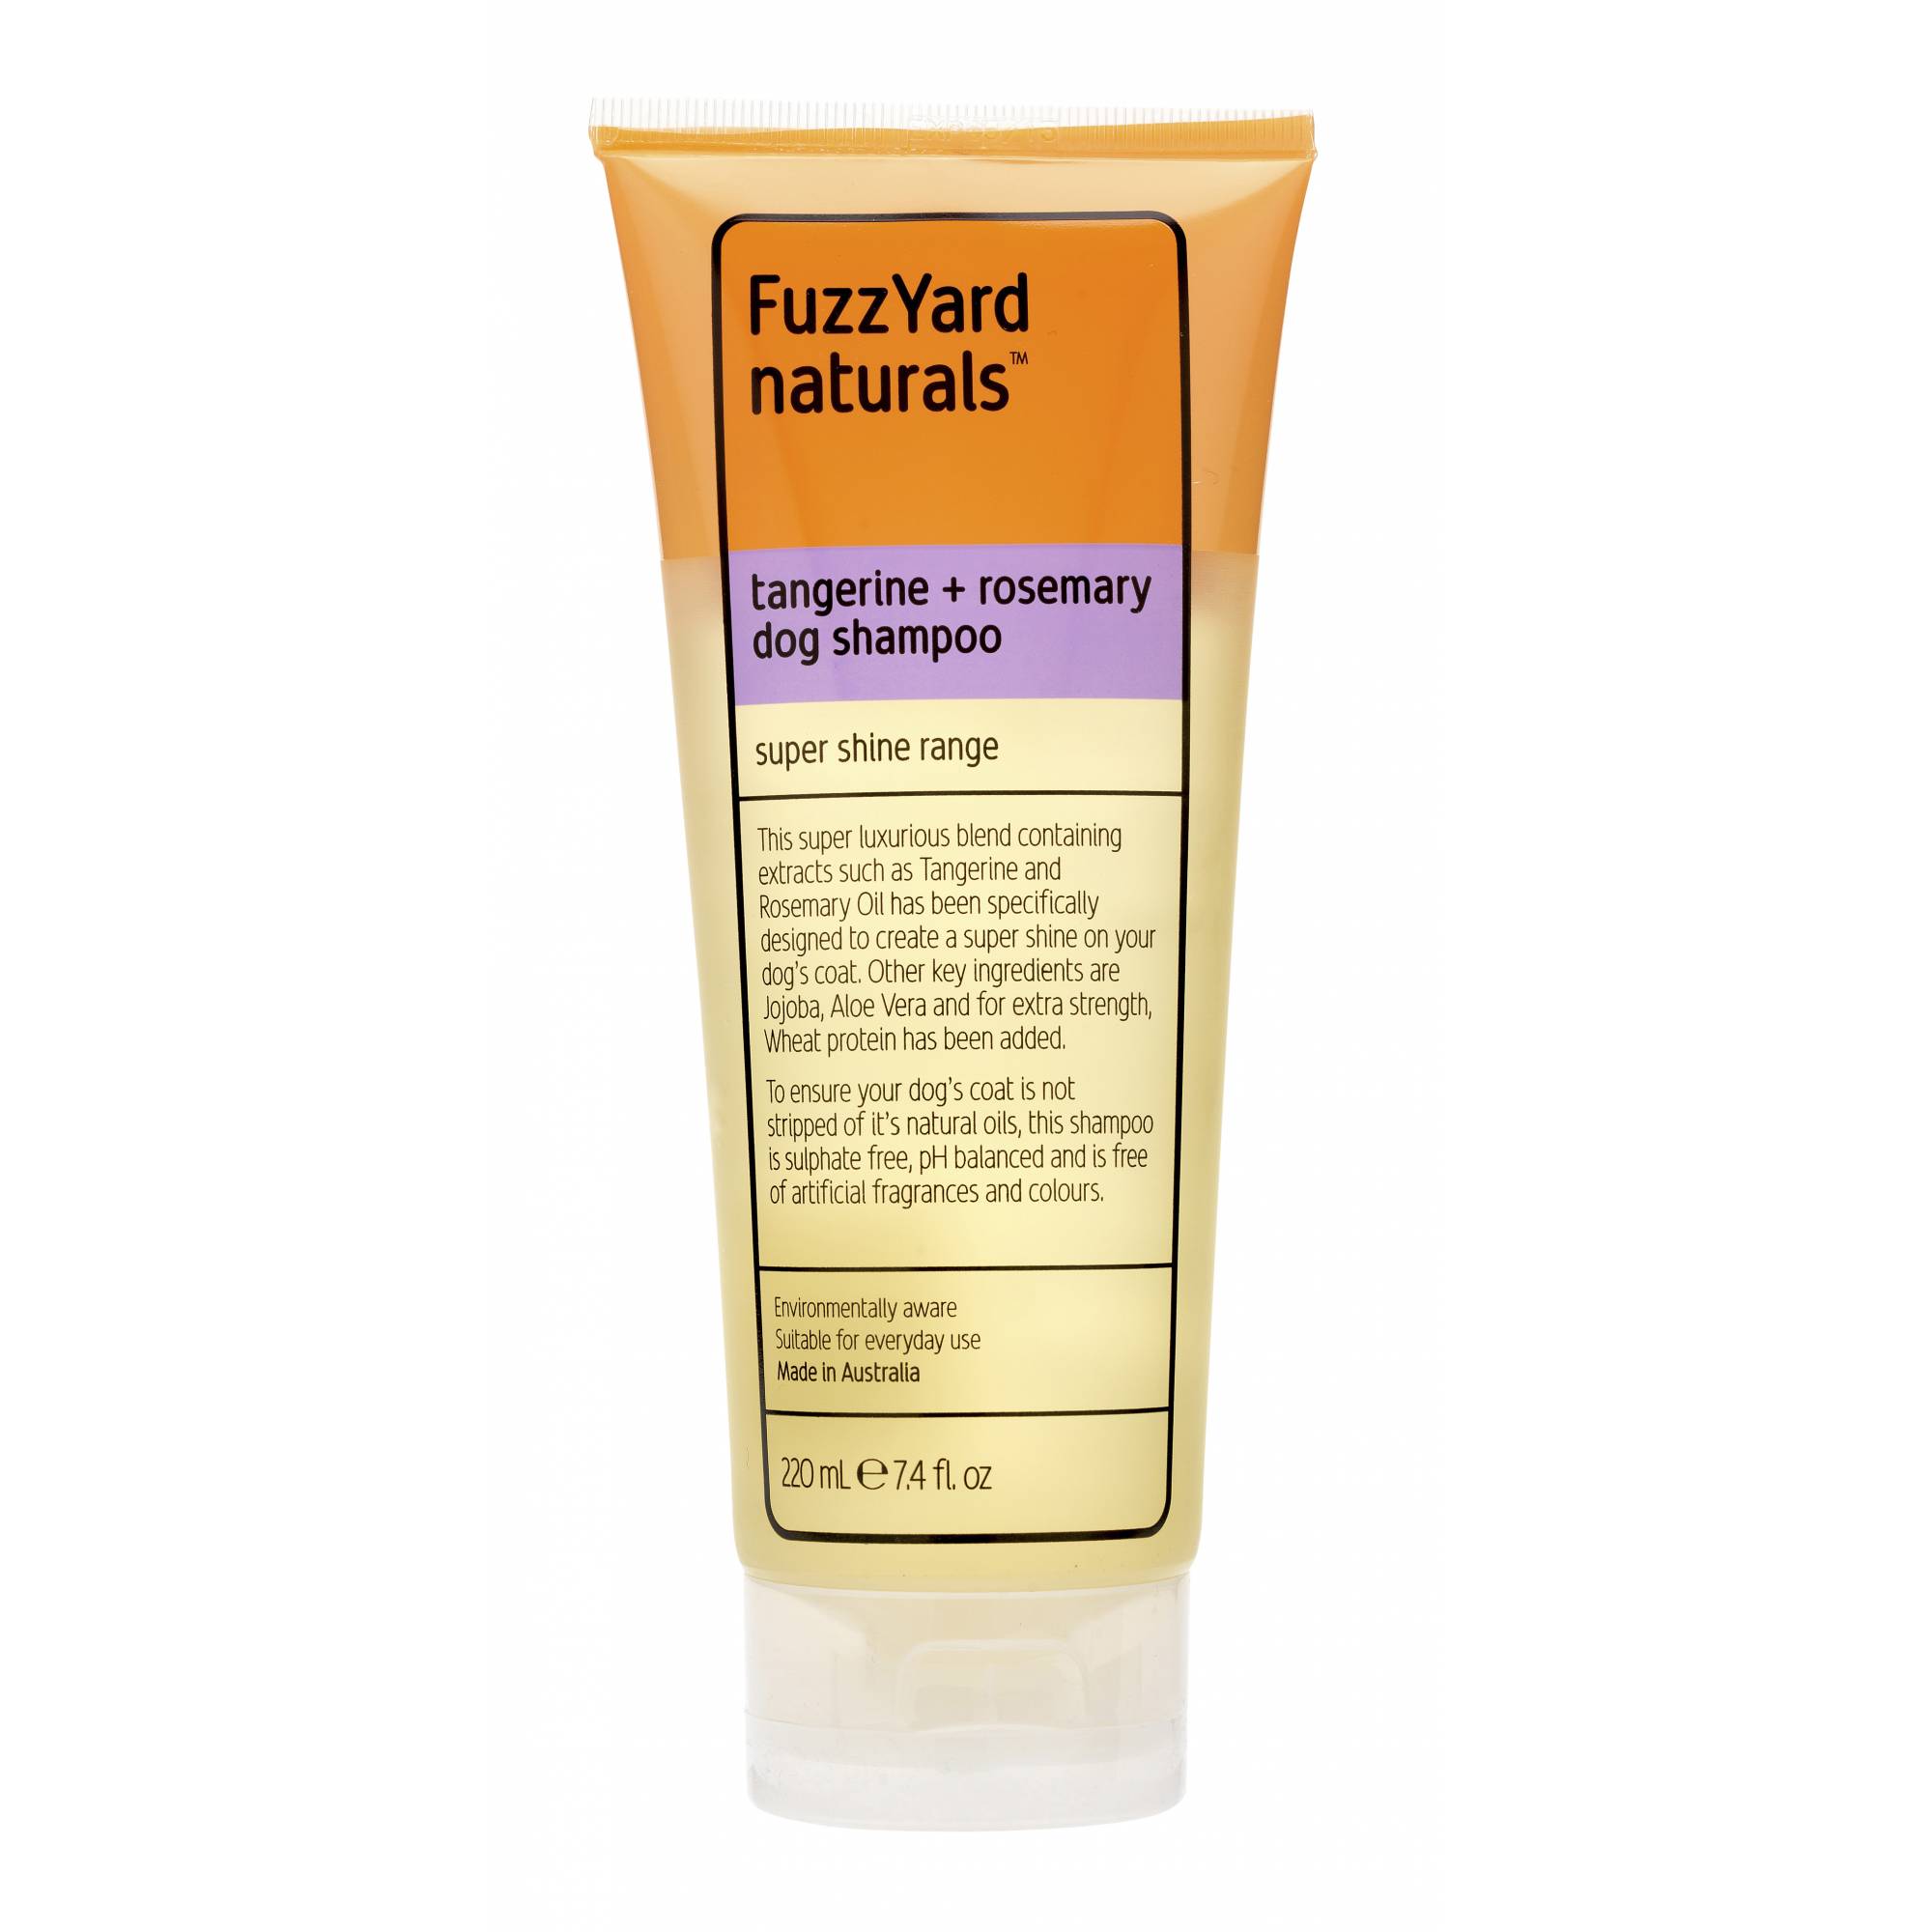 FuzzYard Naturals Tangerine + Rosemary Super Shine Dog Shampoo 220ml (FY23775)